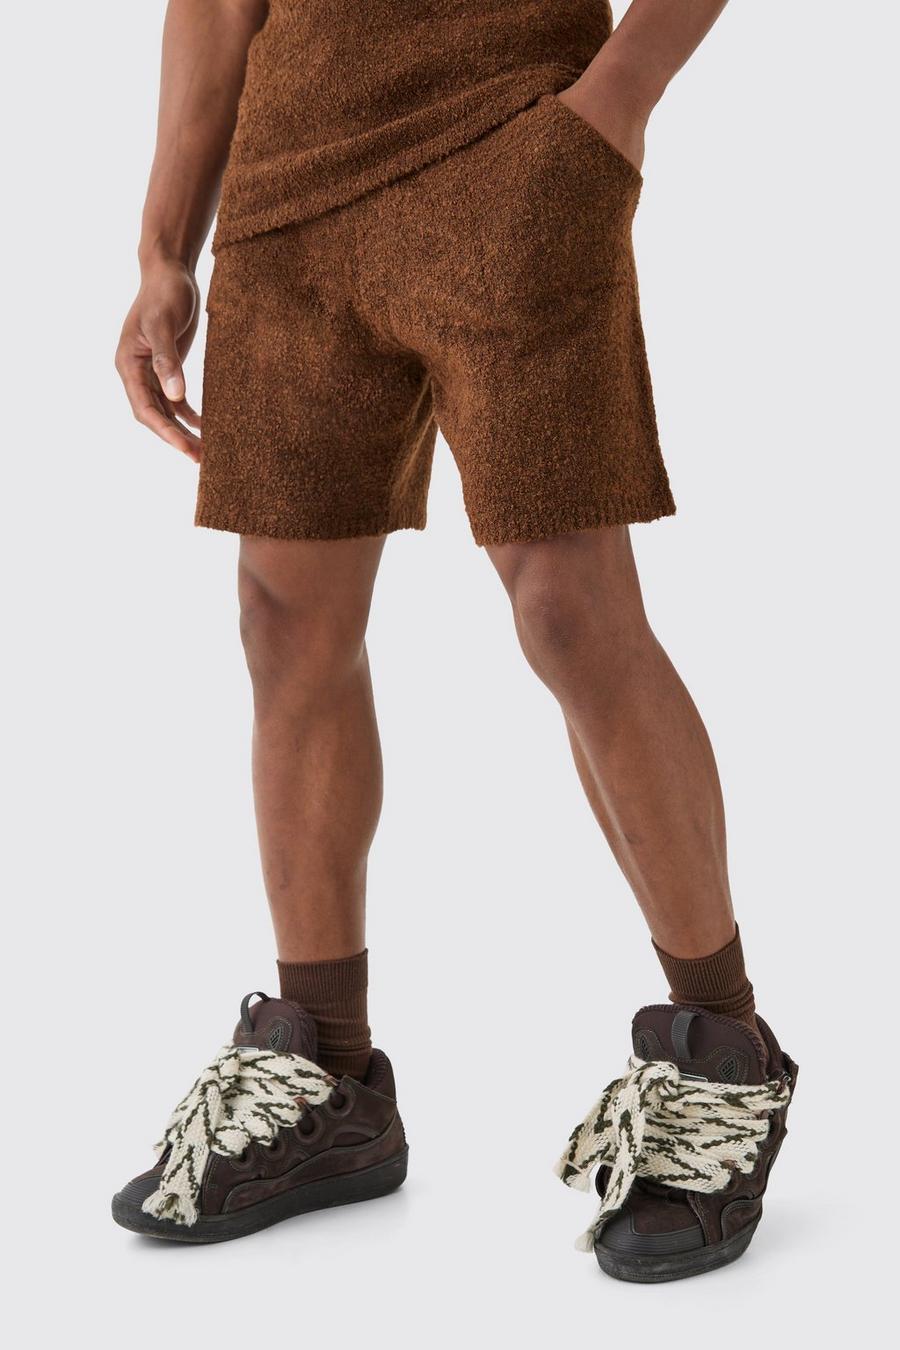 Lockere Bouclee-Shorts in Braun, Chocolate